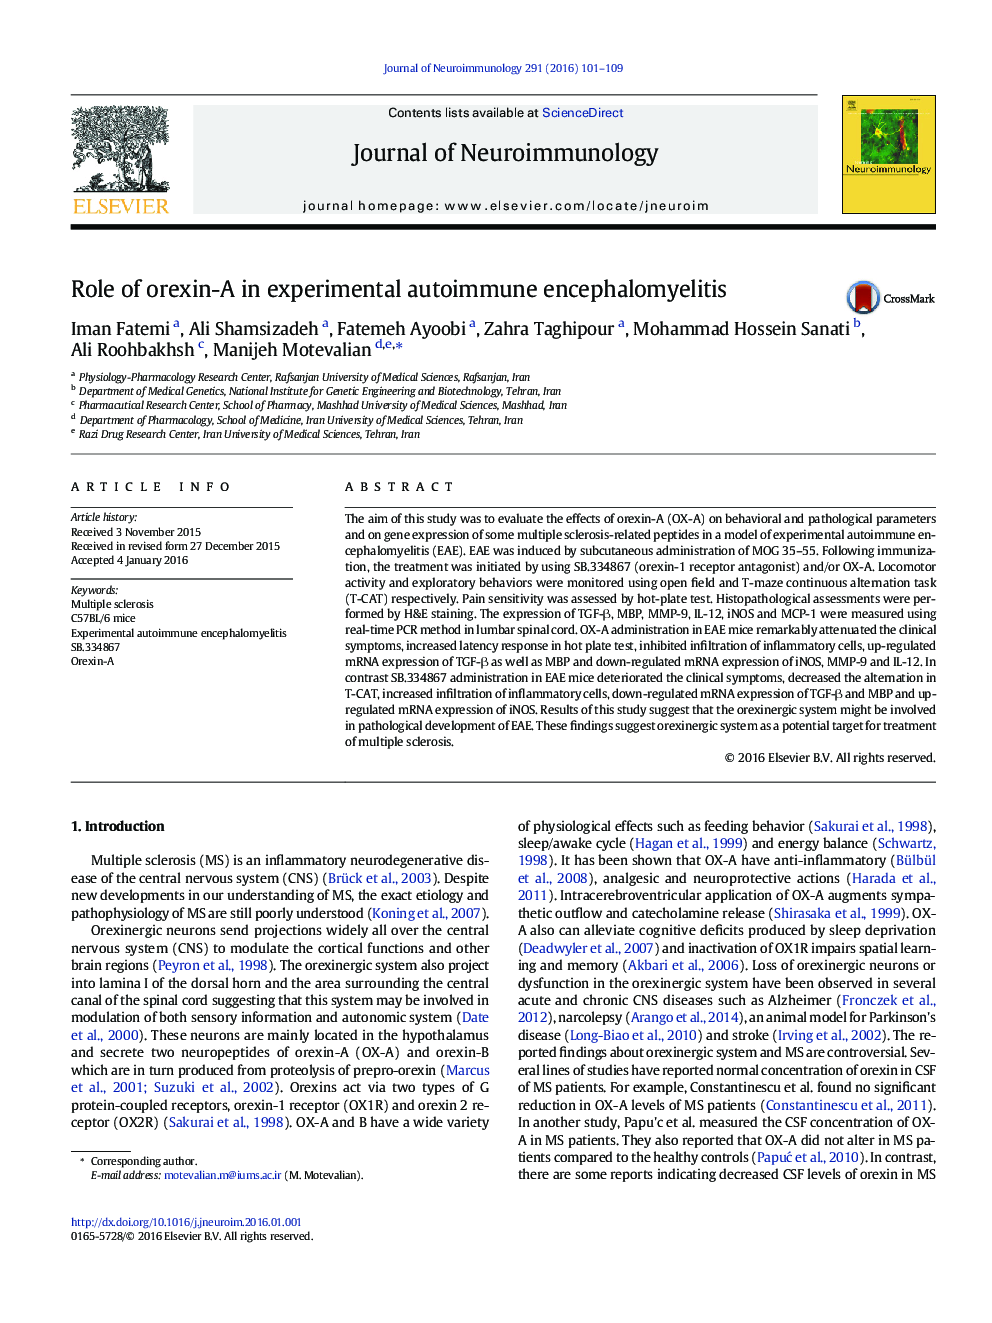 Role of orexin-A in experimental autoimmune encephalomyelitis